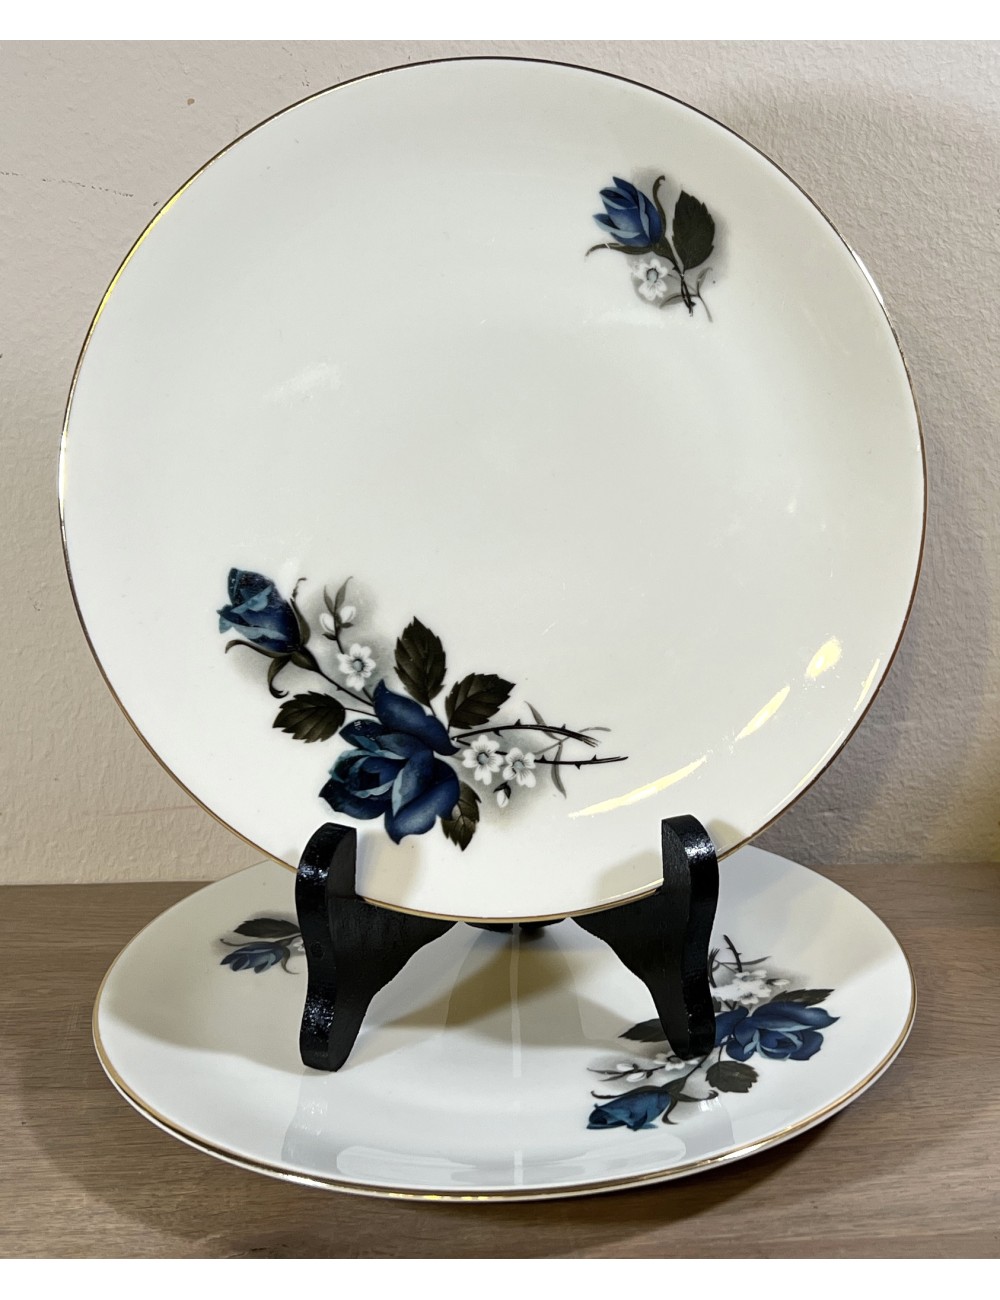 Ontbijtbord / Dessertbord - porselein - Wunsiedel Bavaria - décor in wit met blauw met witte bloemen